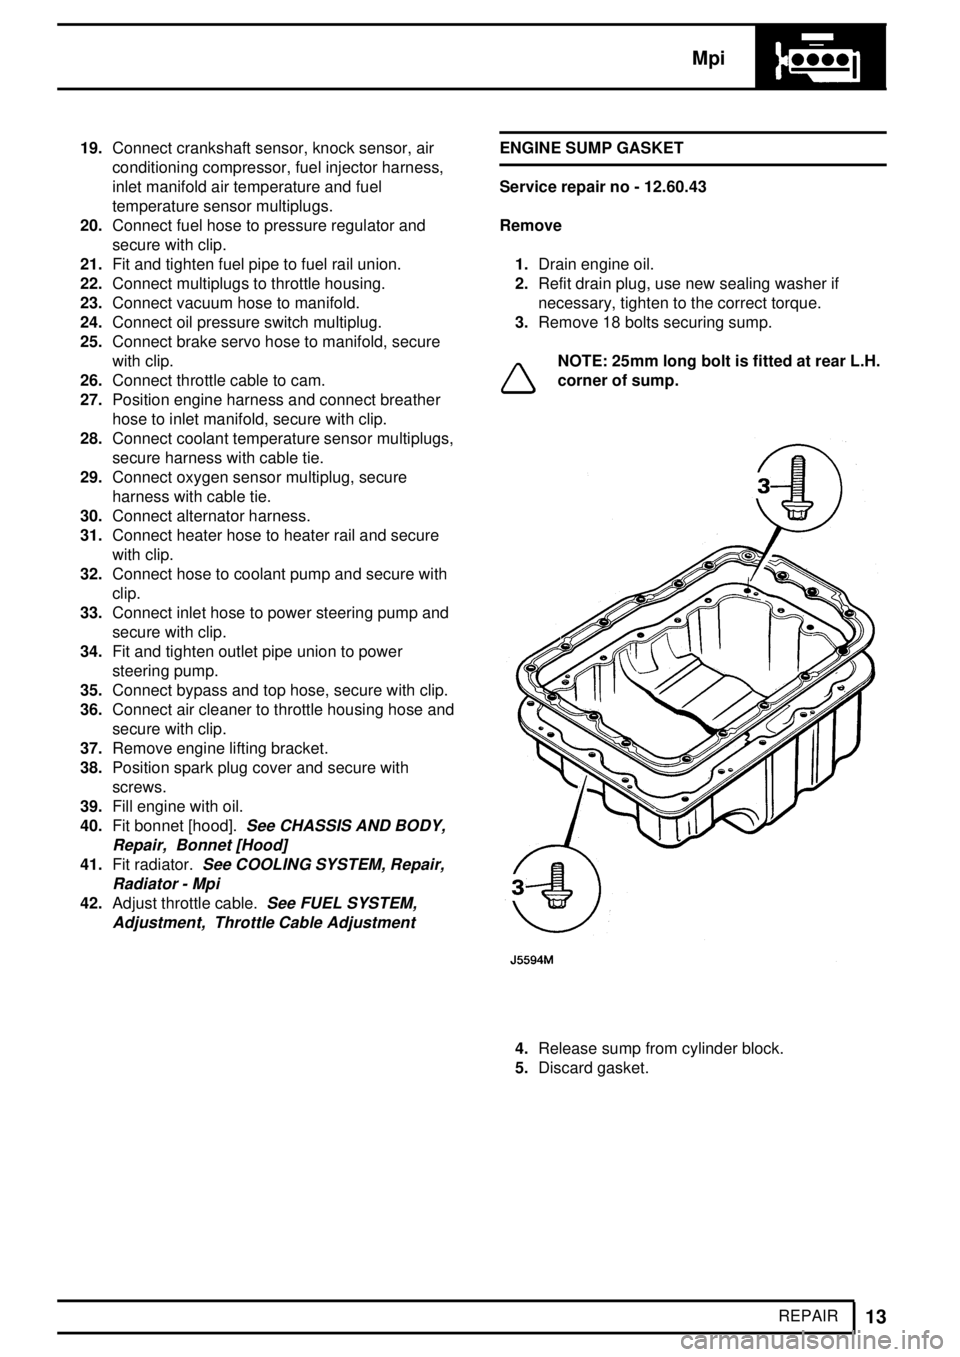 LAND ROVER DISCOVERY 1995  Service Repair Manual Mpi
13
REPAIR 19.Connect crankshaft sensor, knock sensor, air
conditioning compressor, fuel injector harness,
inlet manifold air temperature and fuel
temperature sensor multiplugs.
20.Connect fuel hos